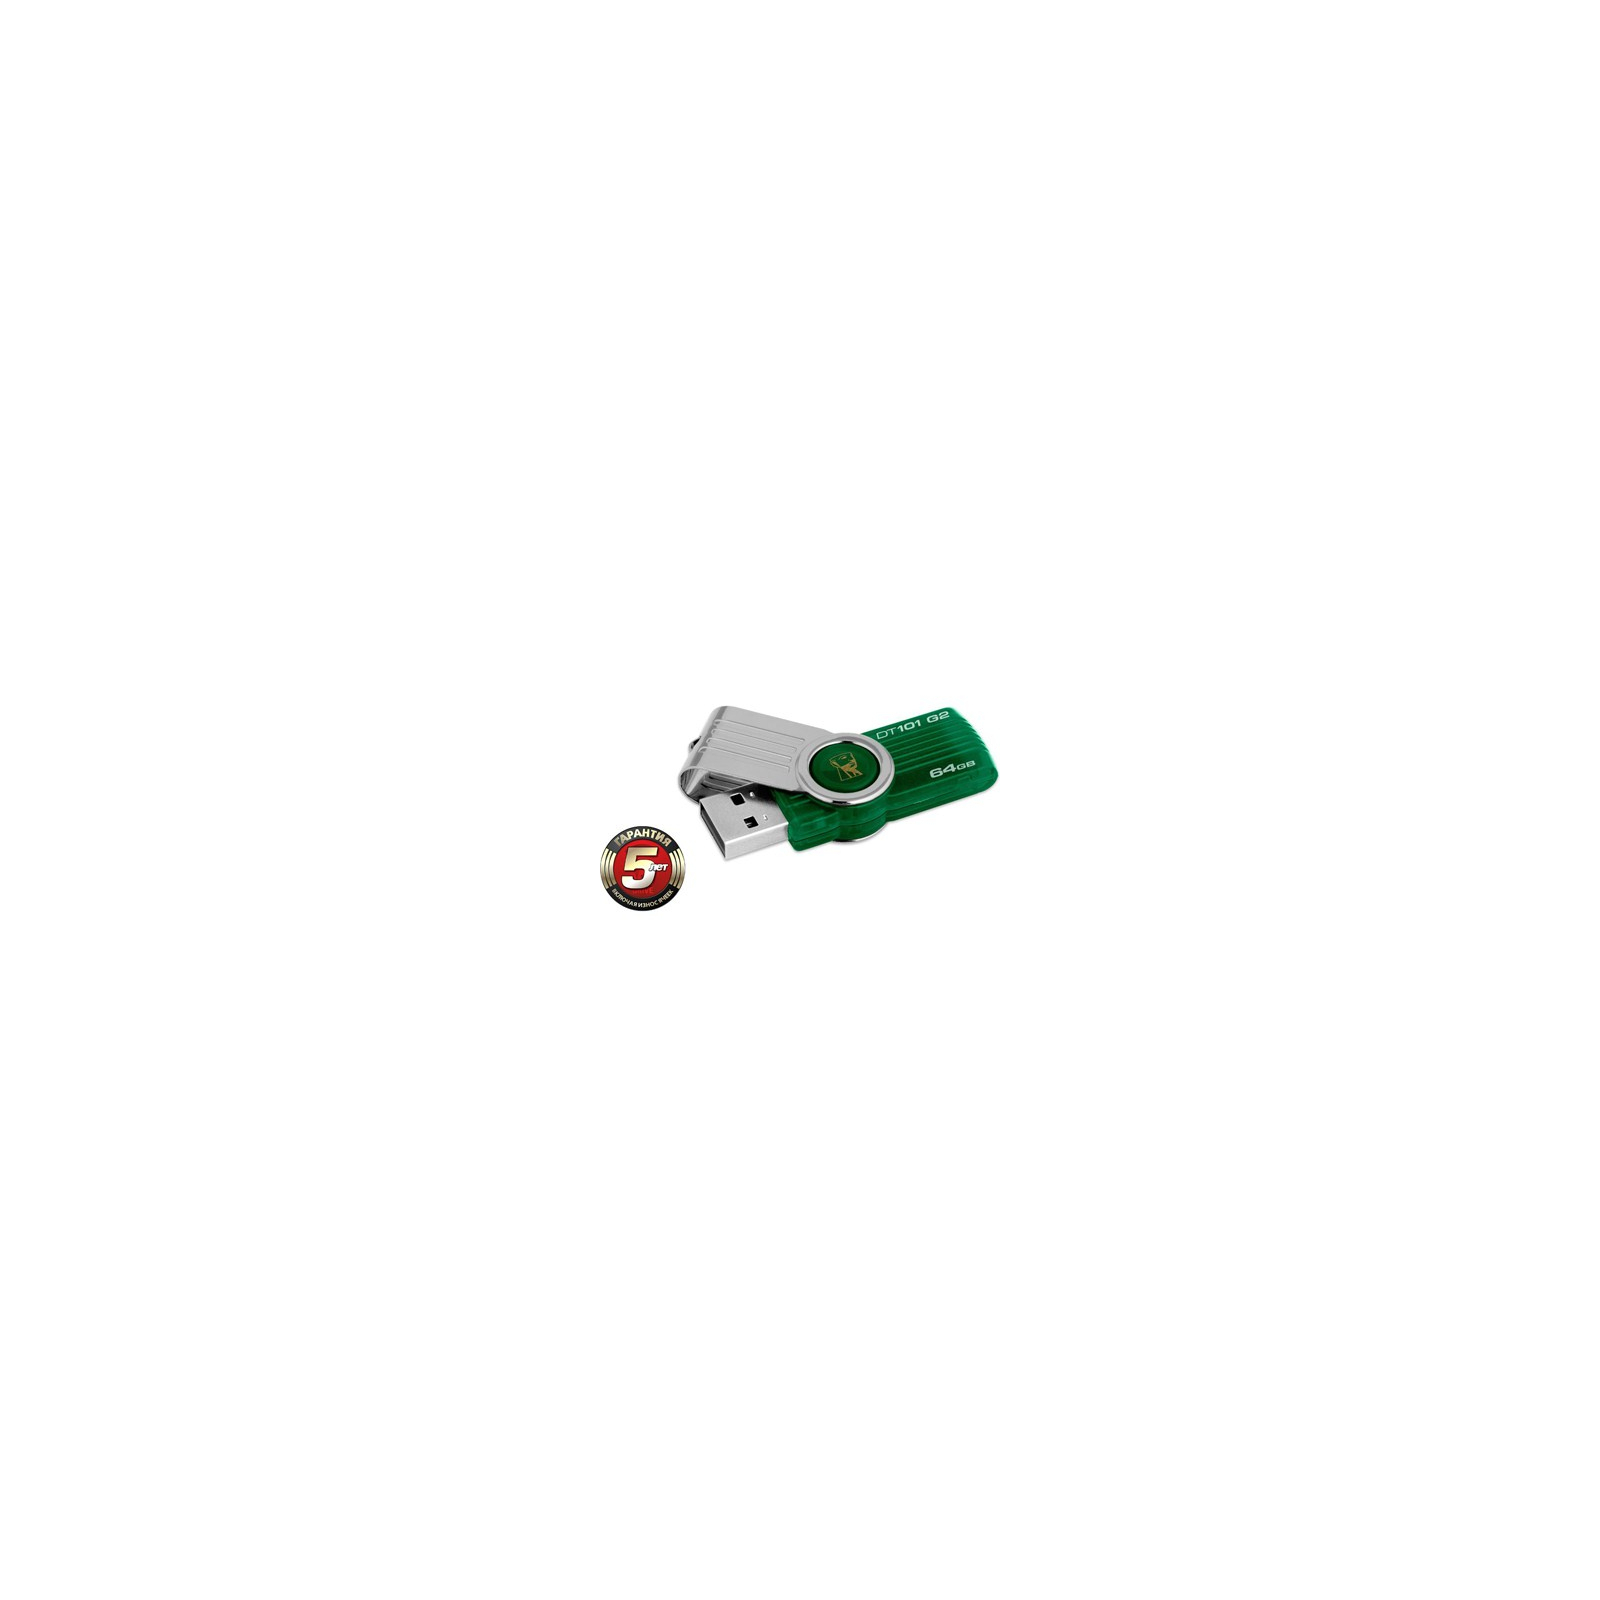 USB флеш накопитель Kingston 64Gb DataTraveler 101 G2 (DT101G2/64GB) изображение 2